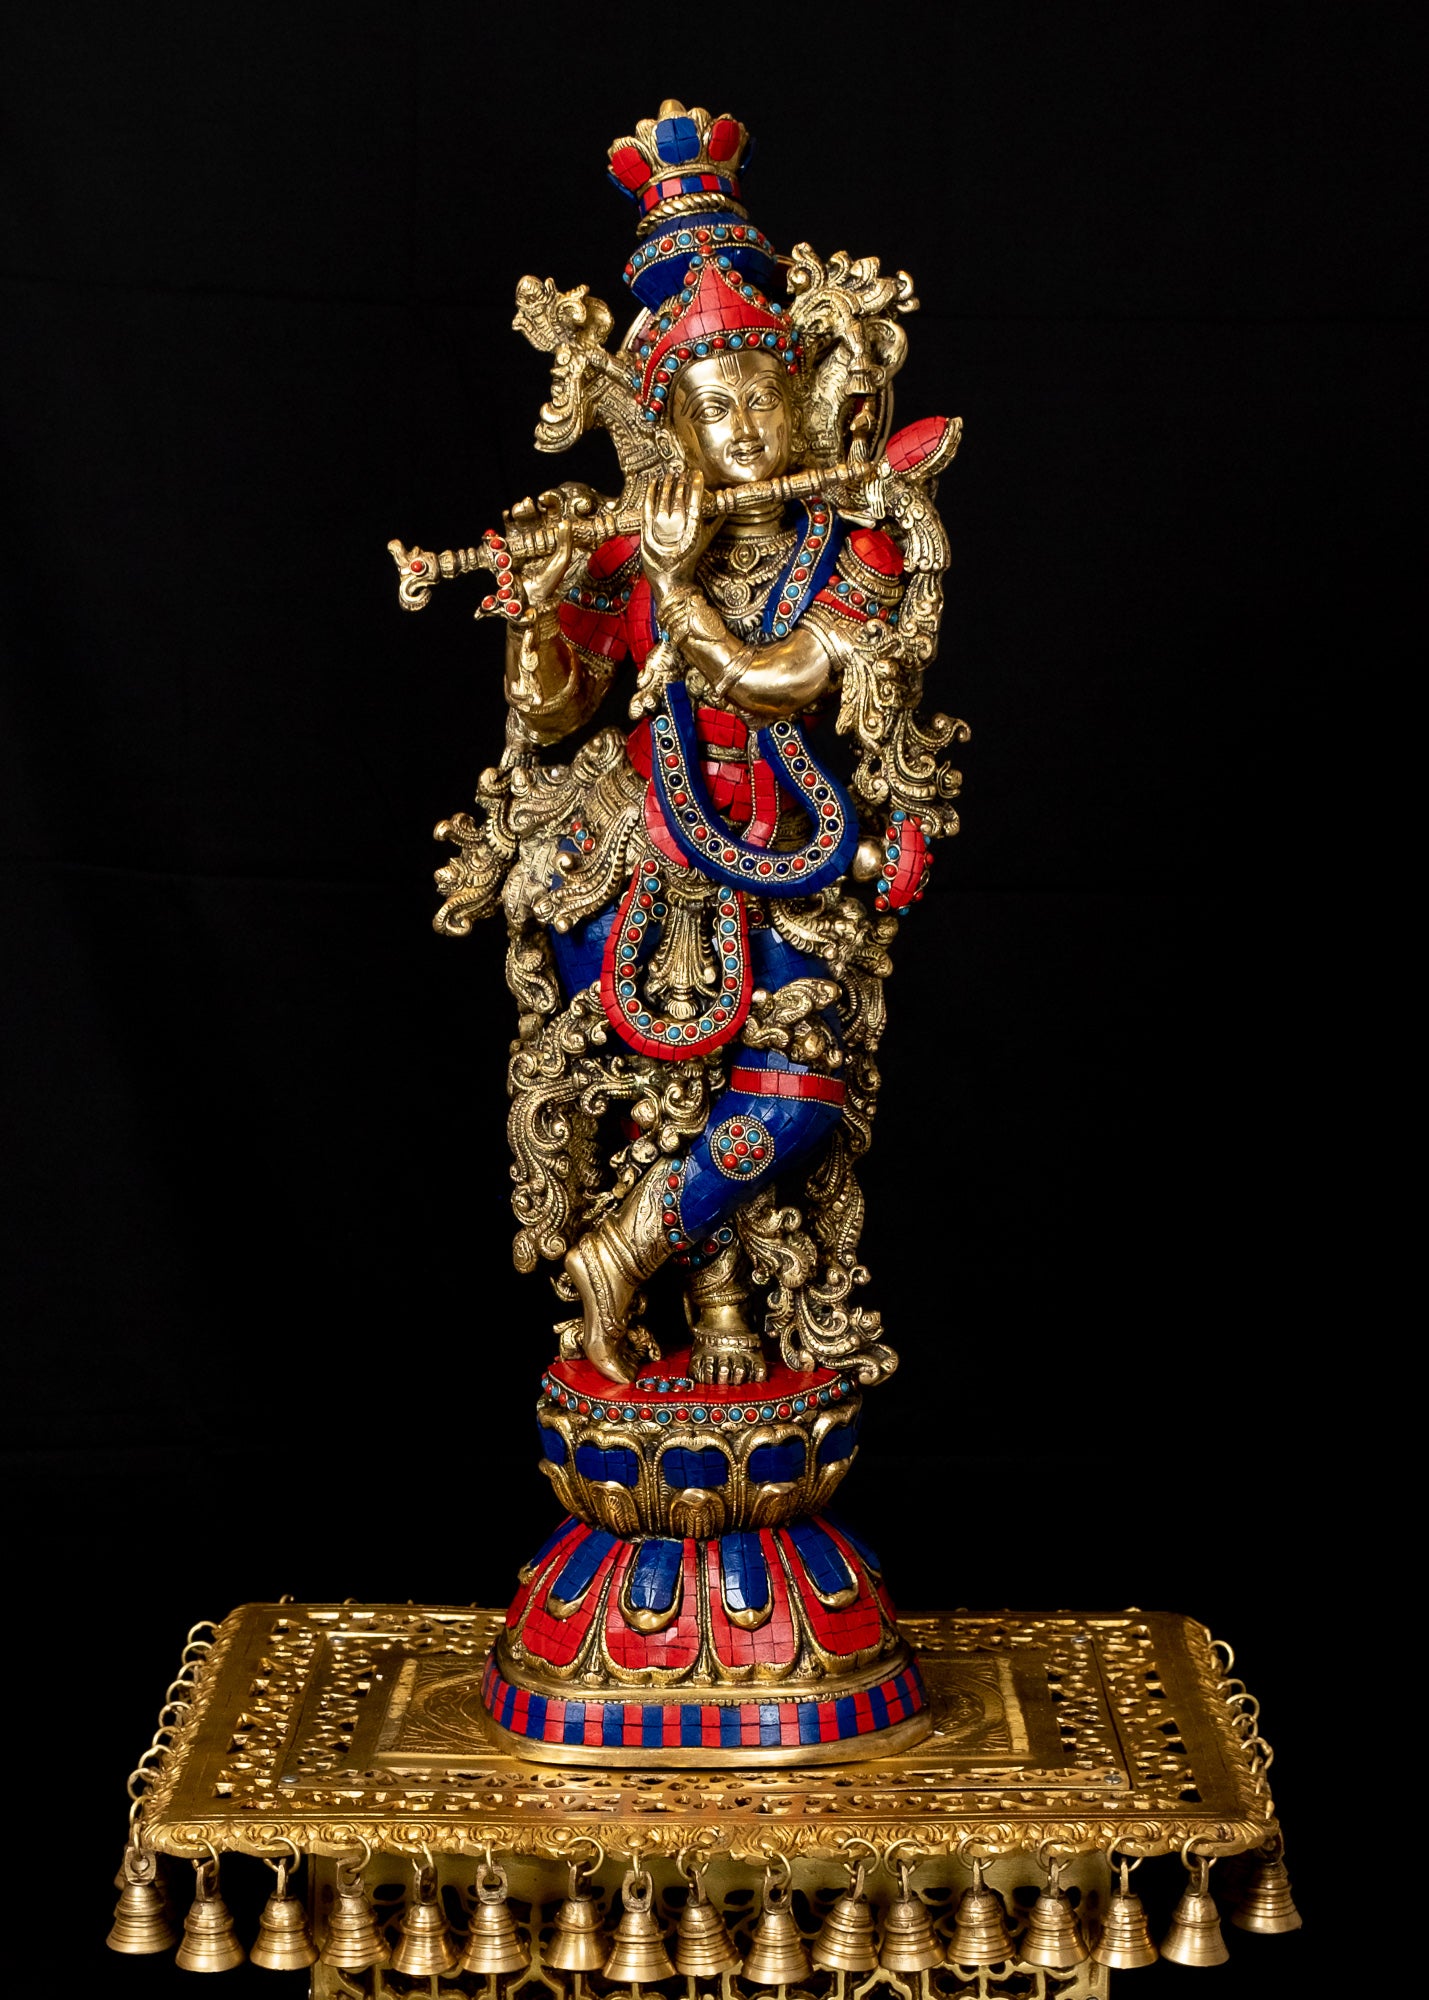 Sri Krishna - The God of Compassion